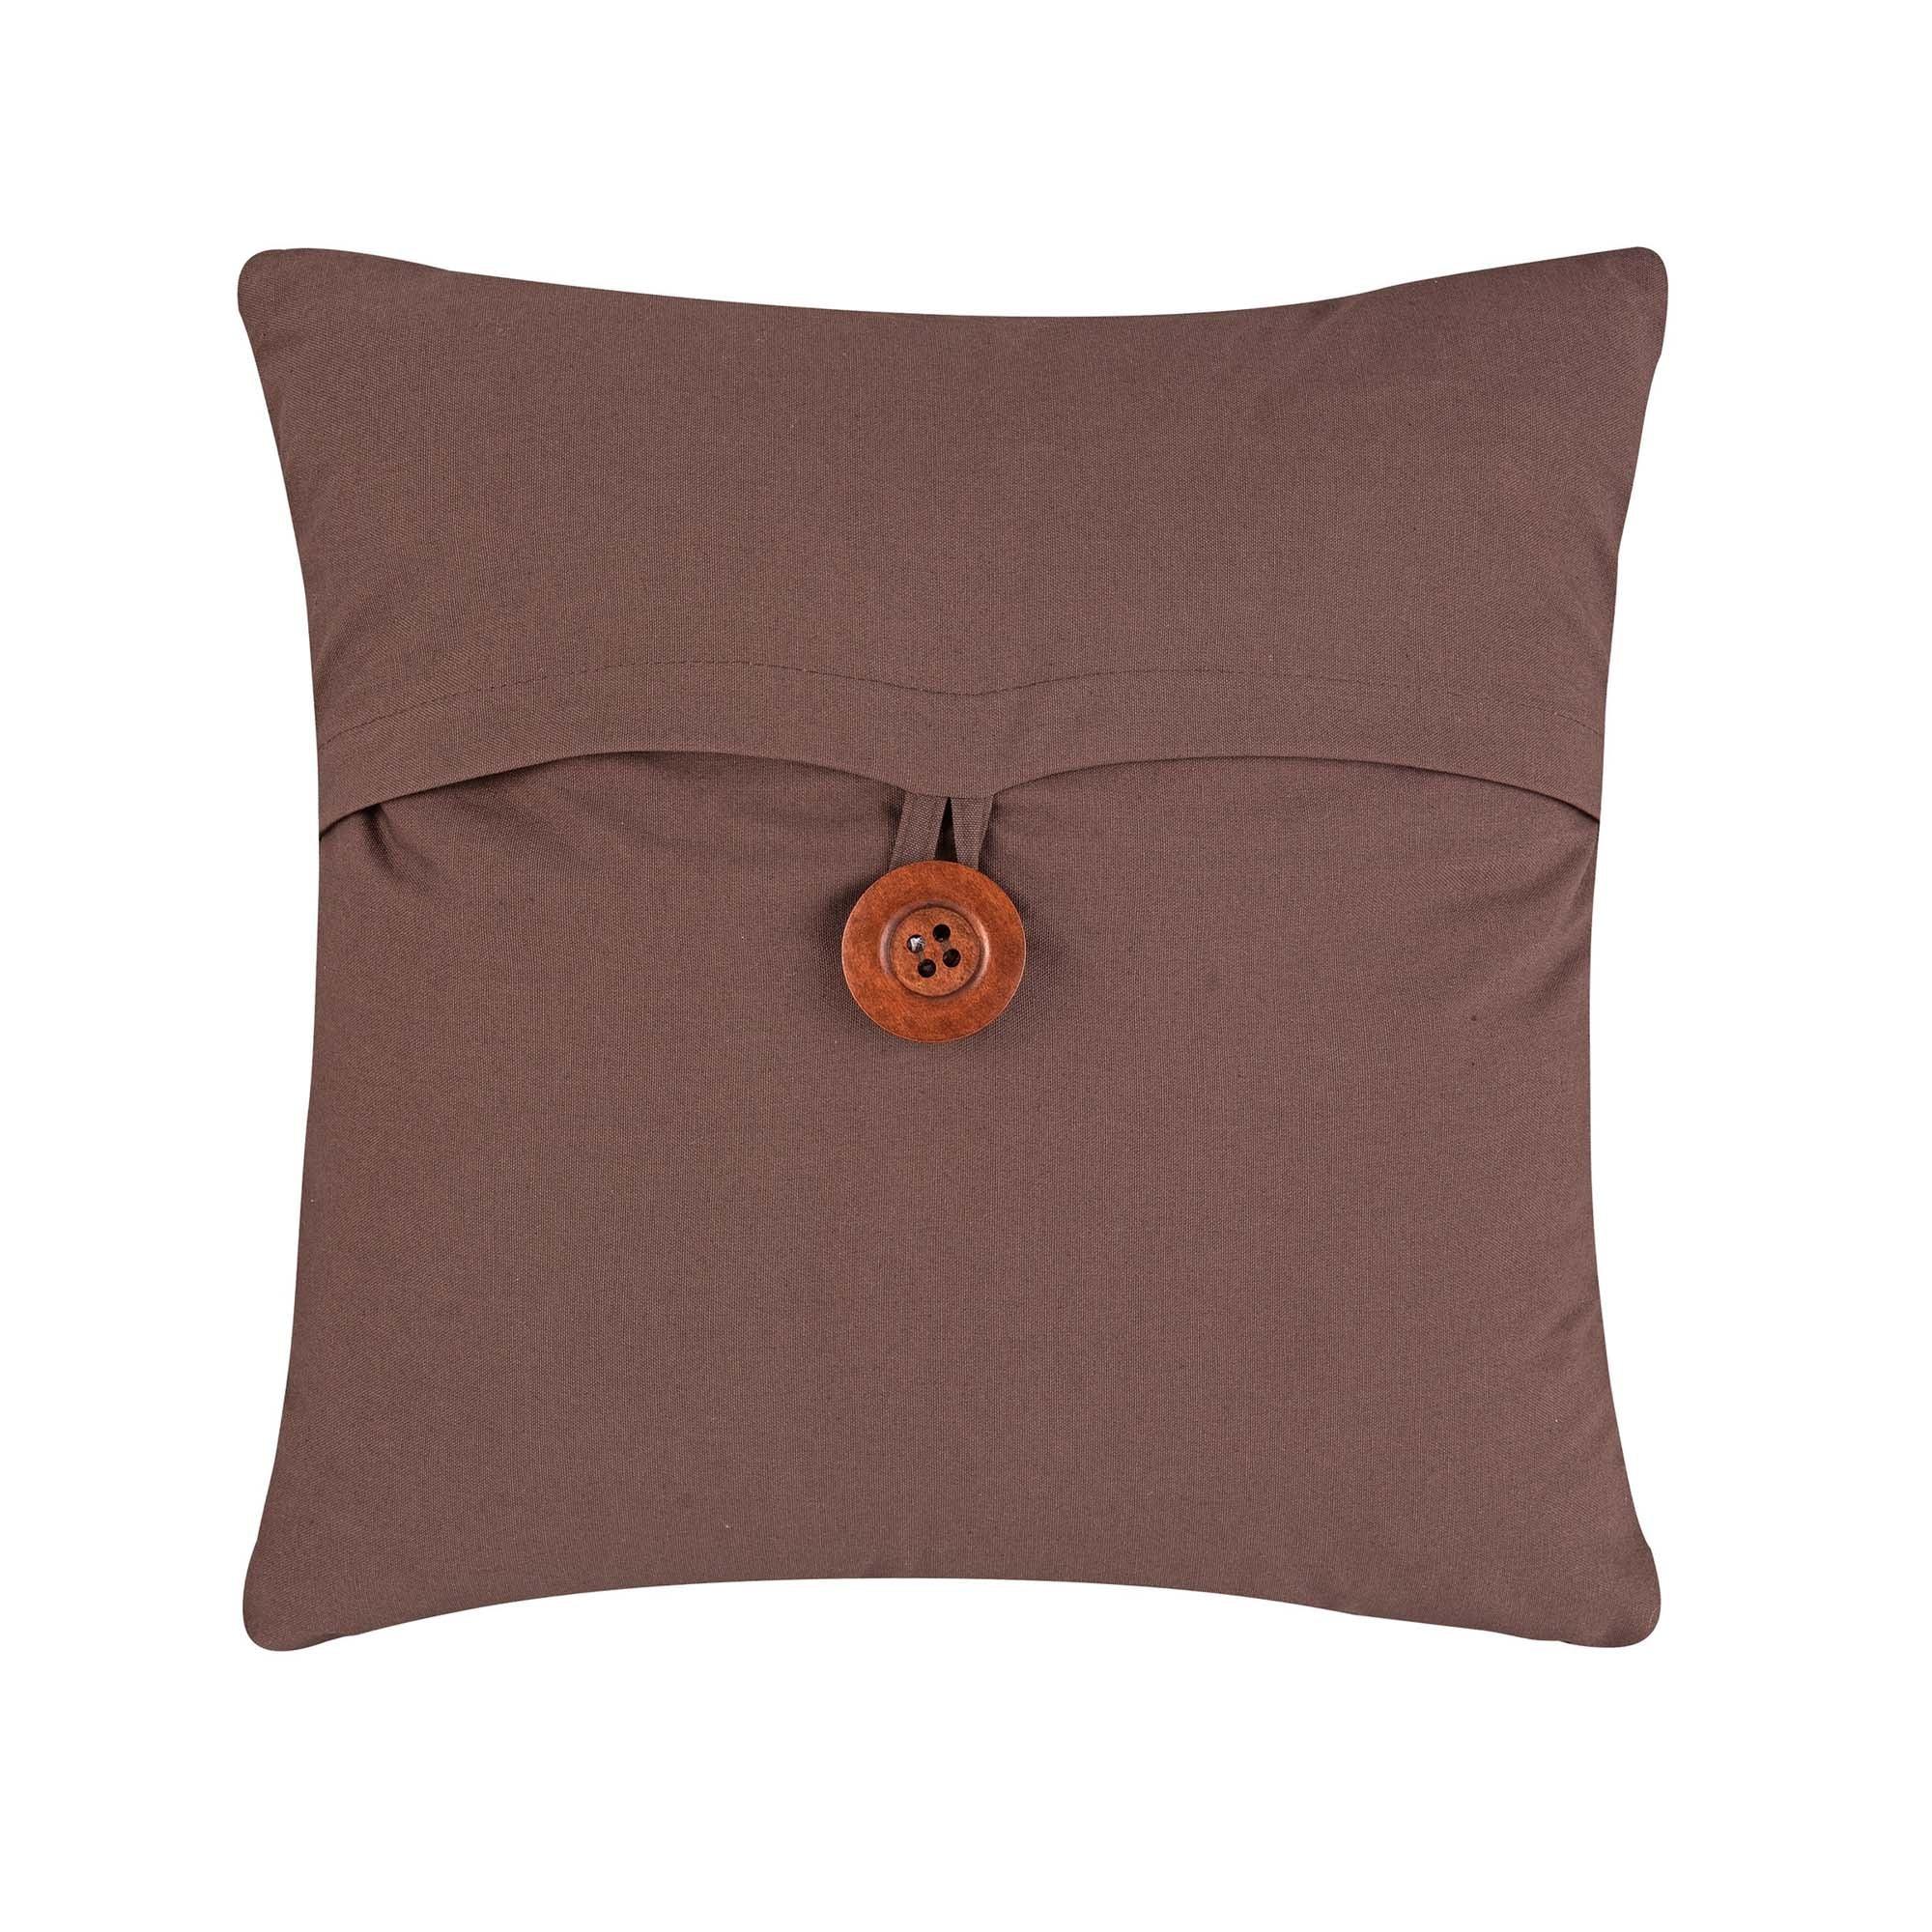 Brown Envelope Decorative Pillow - Wild Wings